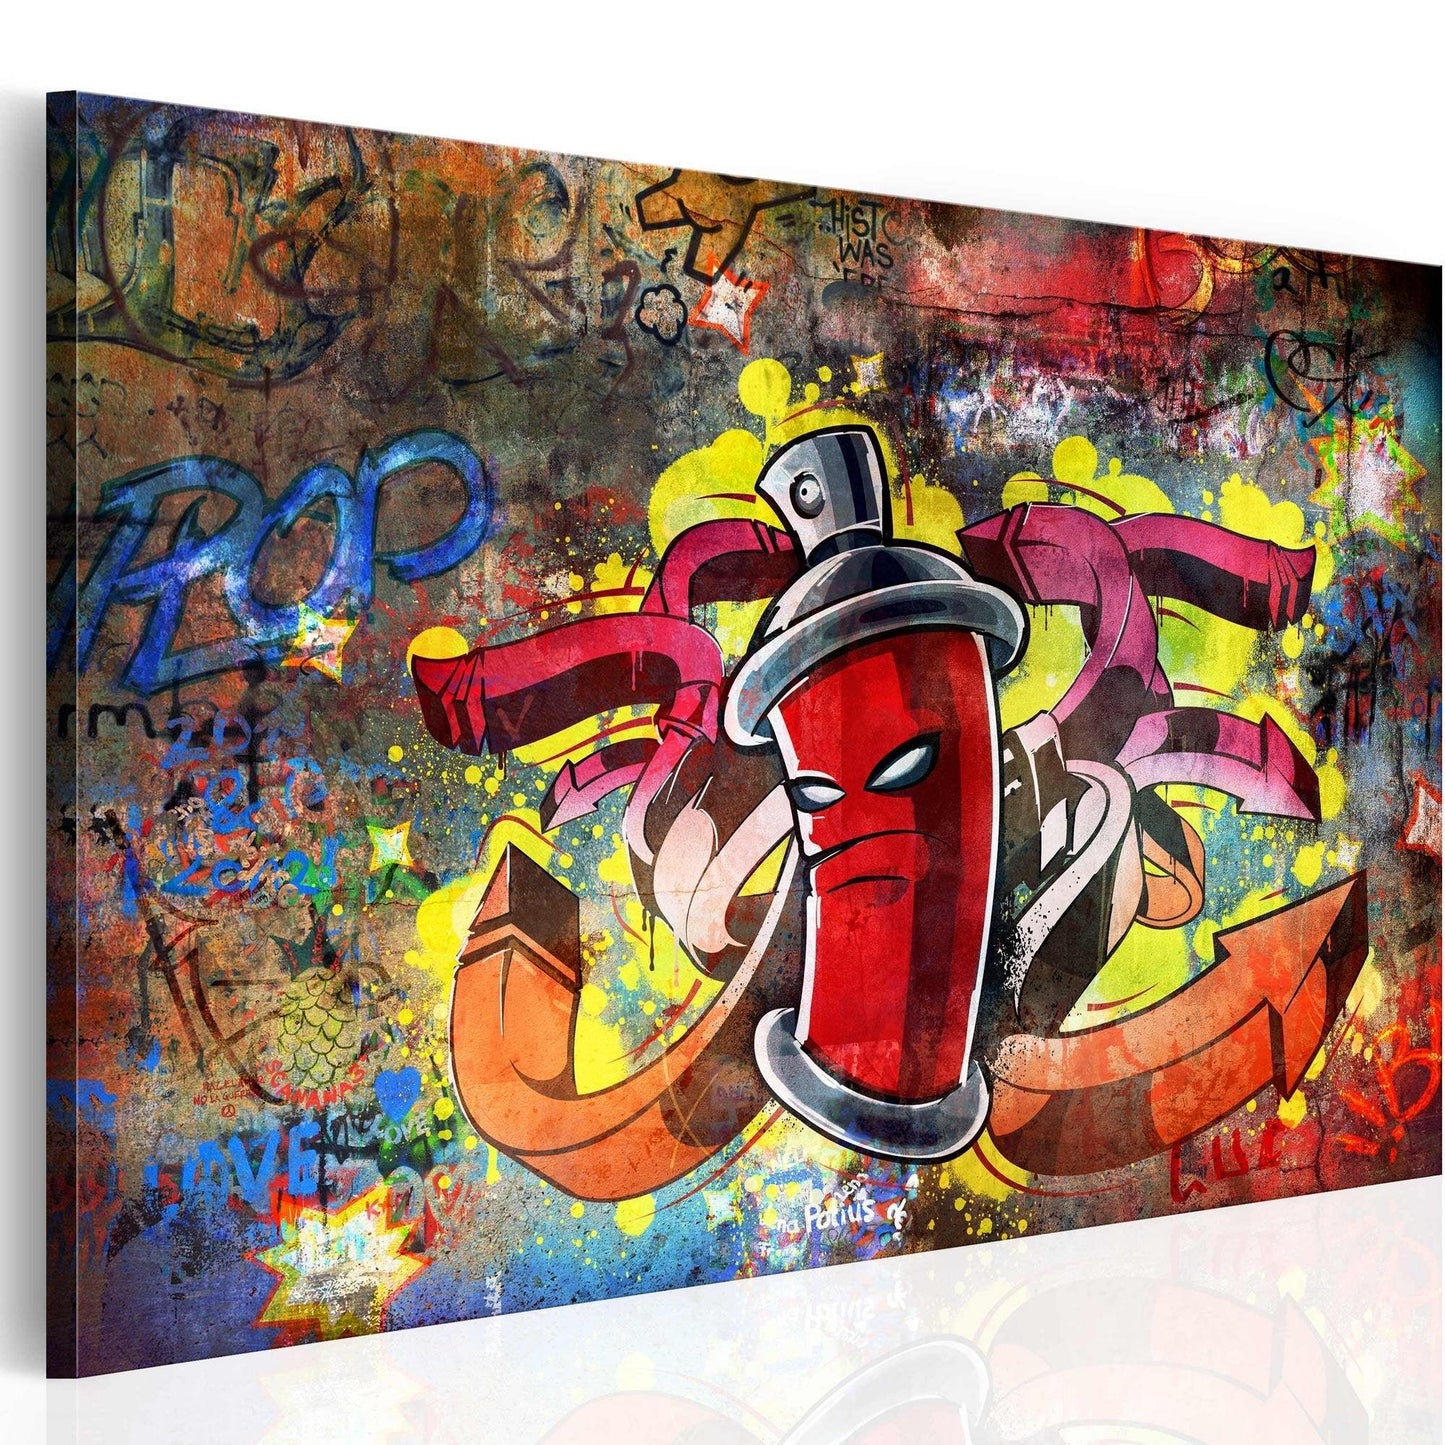 Canvas Print - Graffiti master - www.trendingbestsellers.com